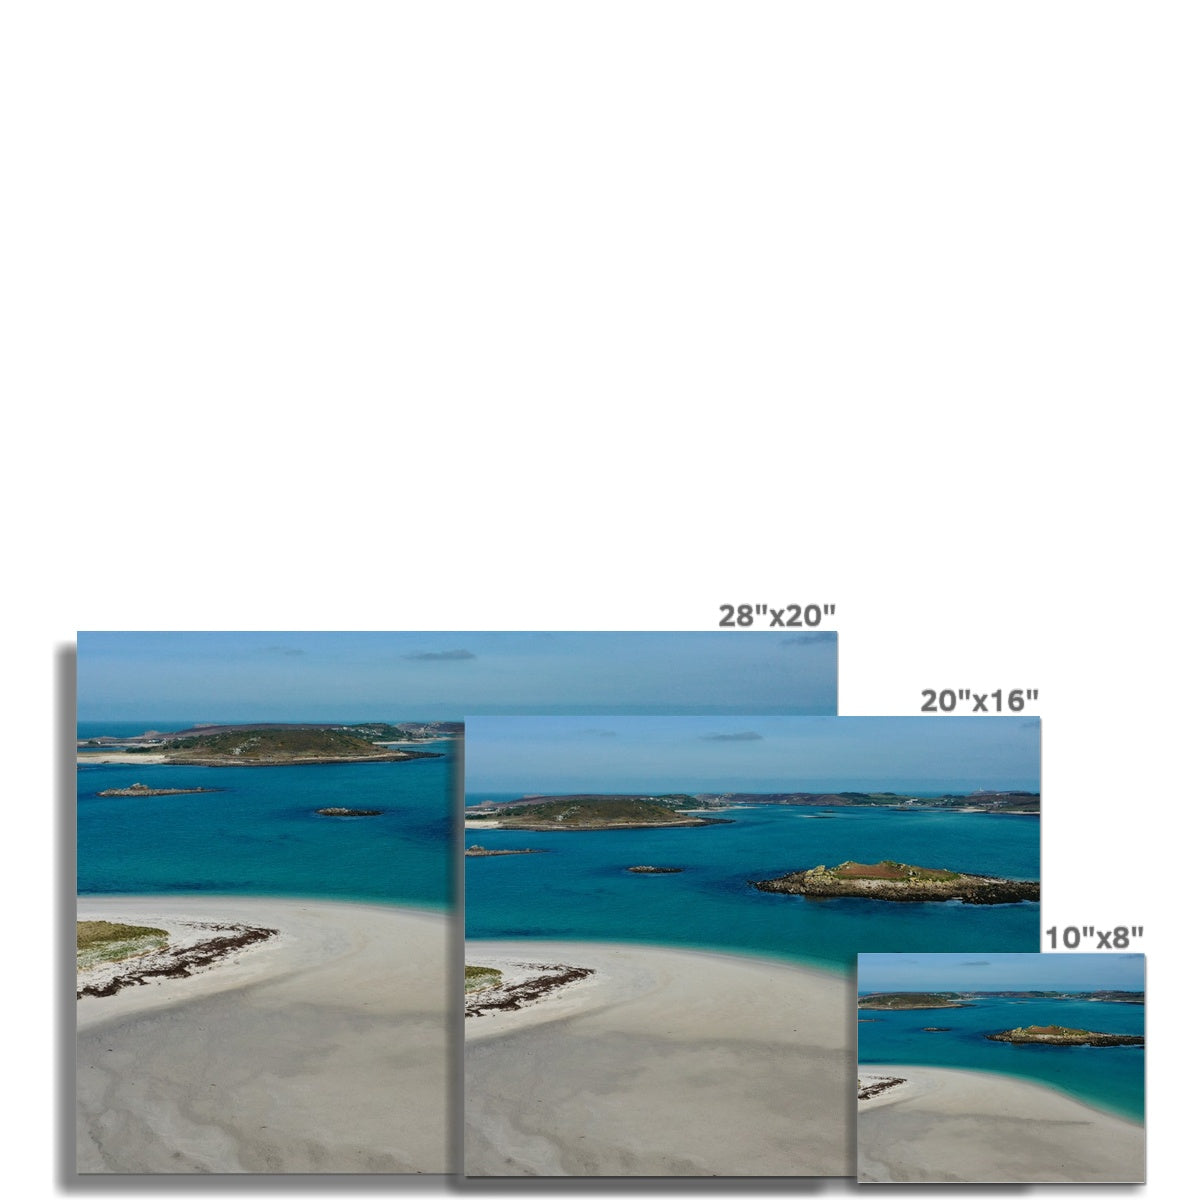 samson sand bar picture sizes